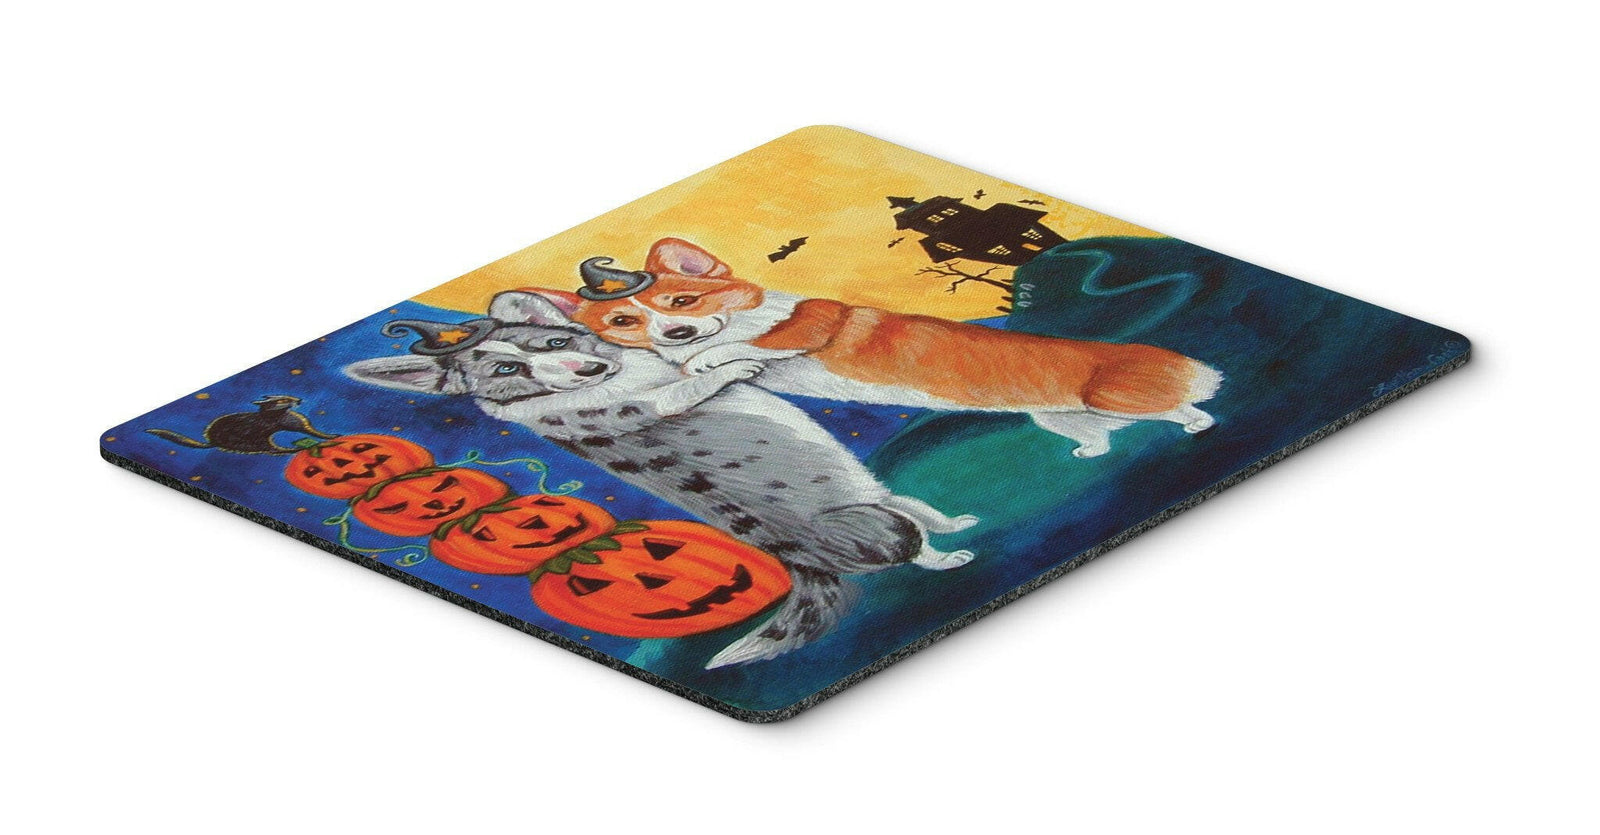 Corgi Halloween Scare Mouse Pad, Hot Pad or Trivet 7413MP by Caroline's Treasures